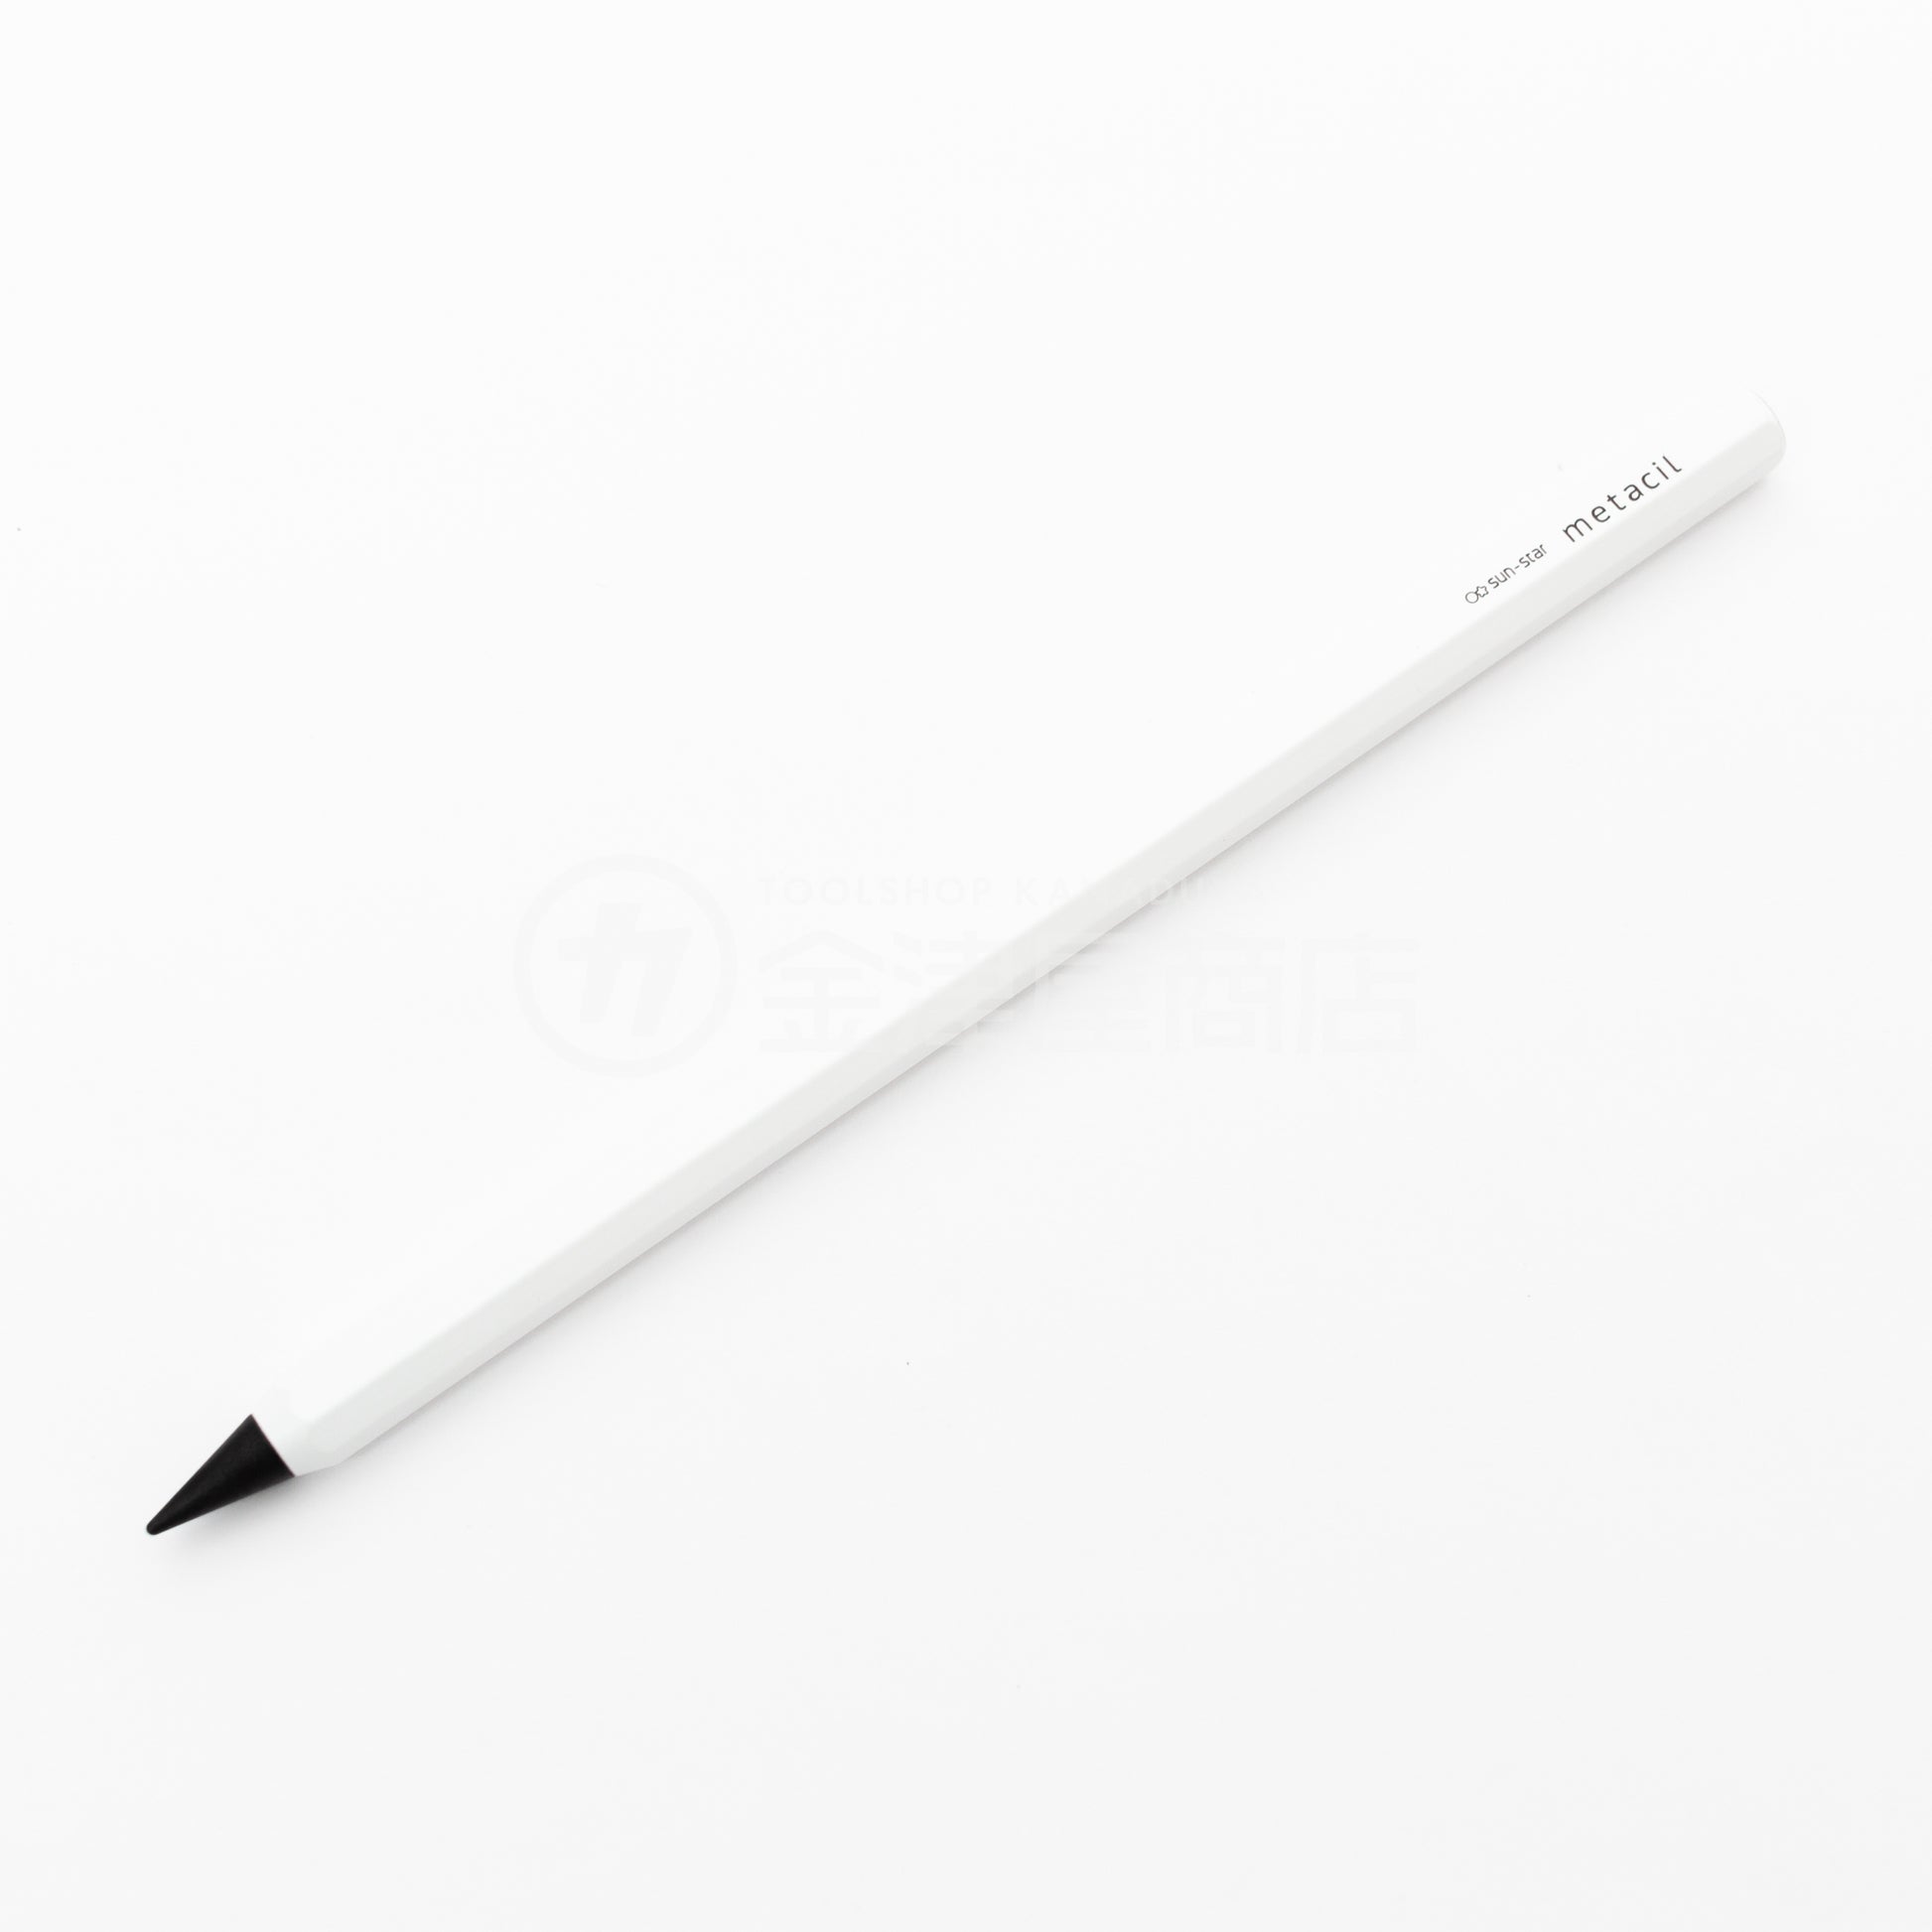 Sun-Star Metal Pencil metacil a pencil made of metal to the core